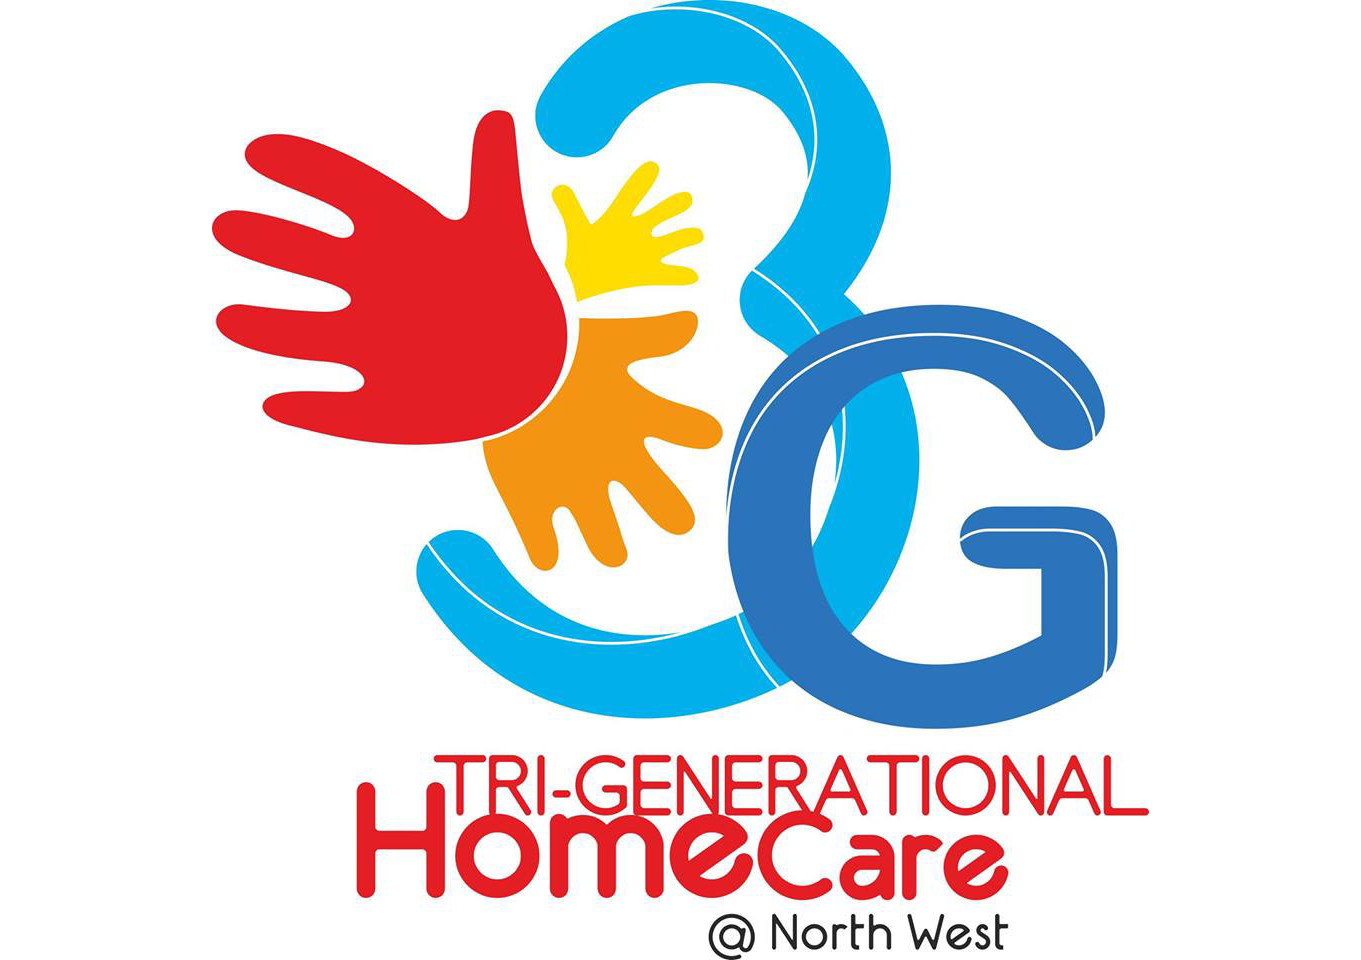 Tri-Generational Homecare